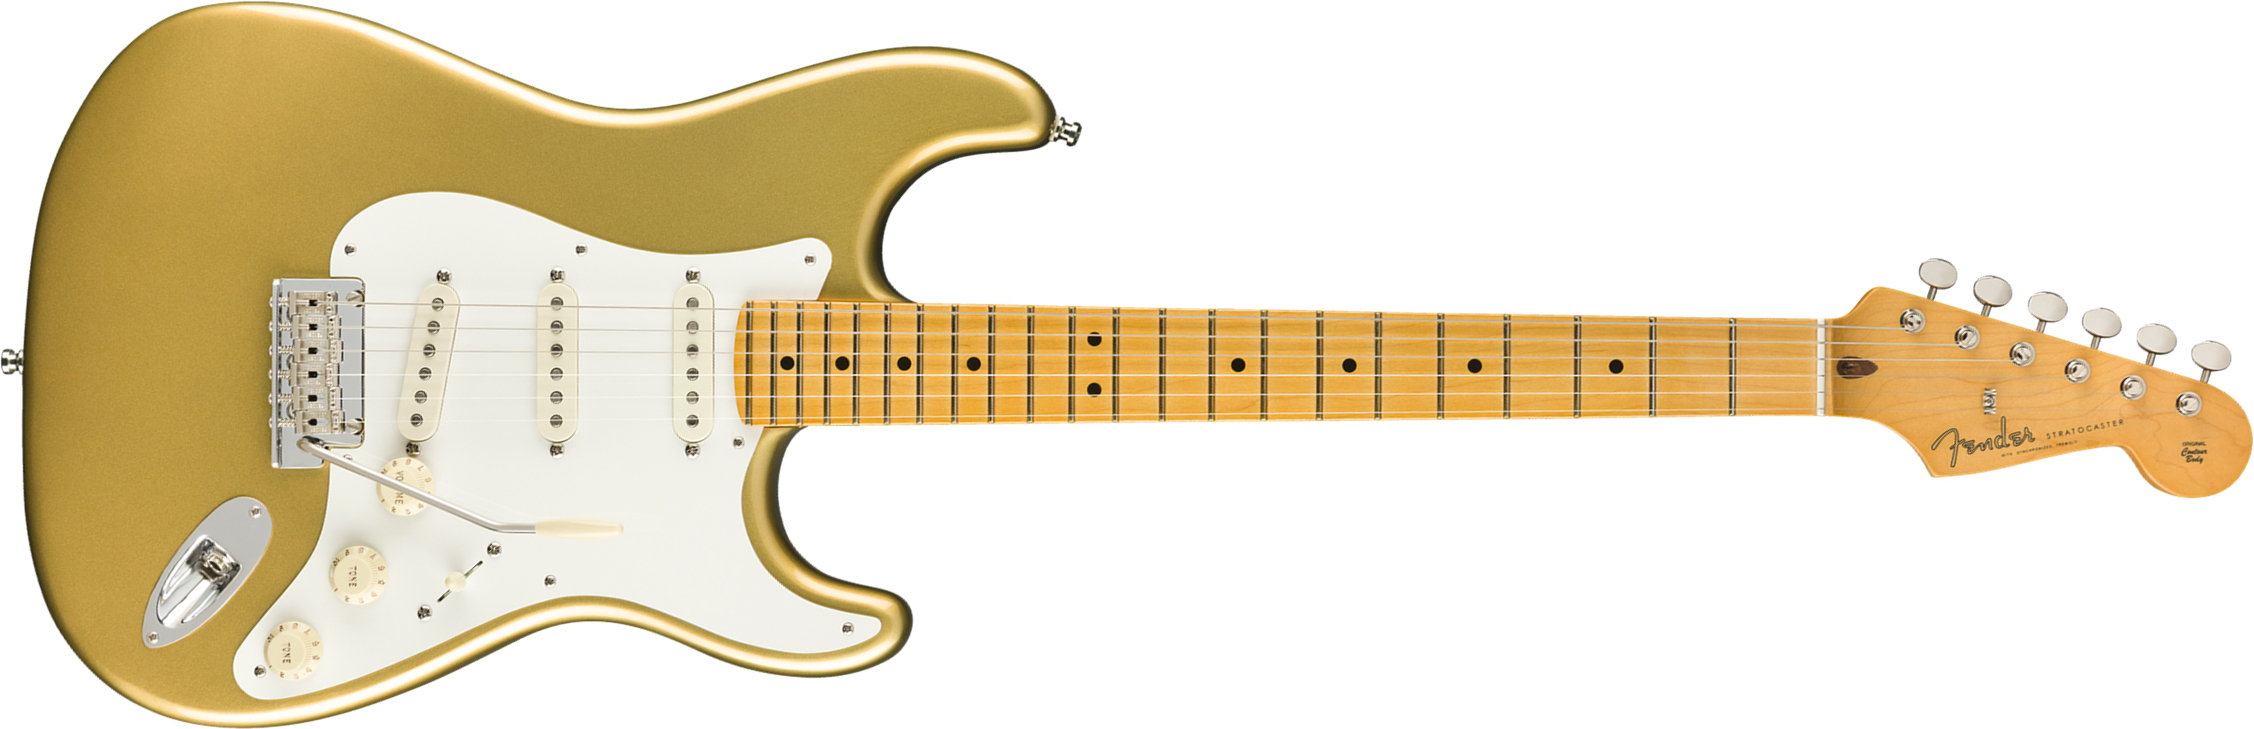 Fender Strat Lincoln Brewster Usa Signature Mn - Aztec Gold - Guitarra eléctrica con forma de str. - Main picture